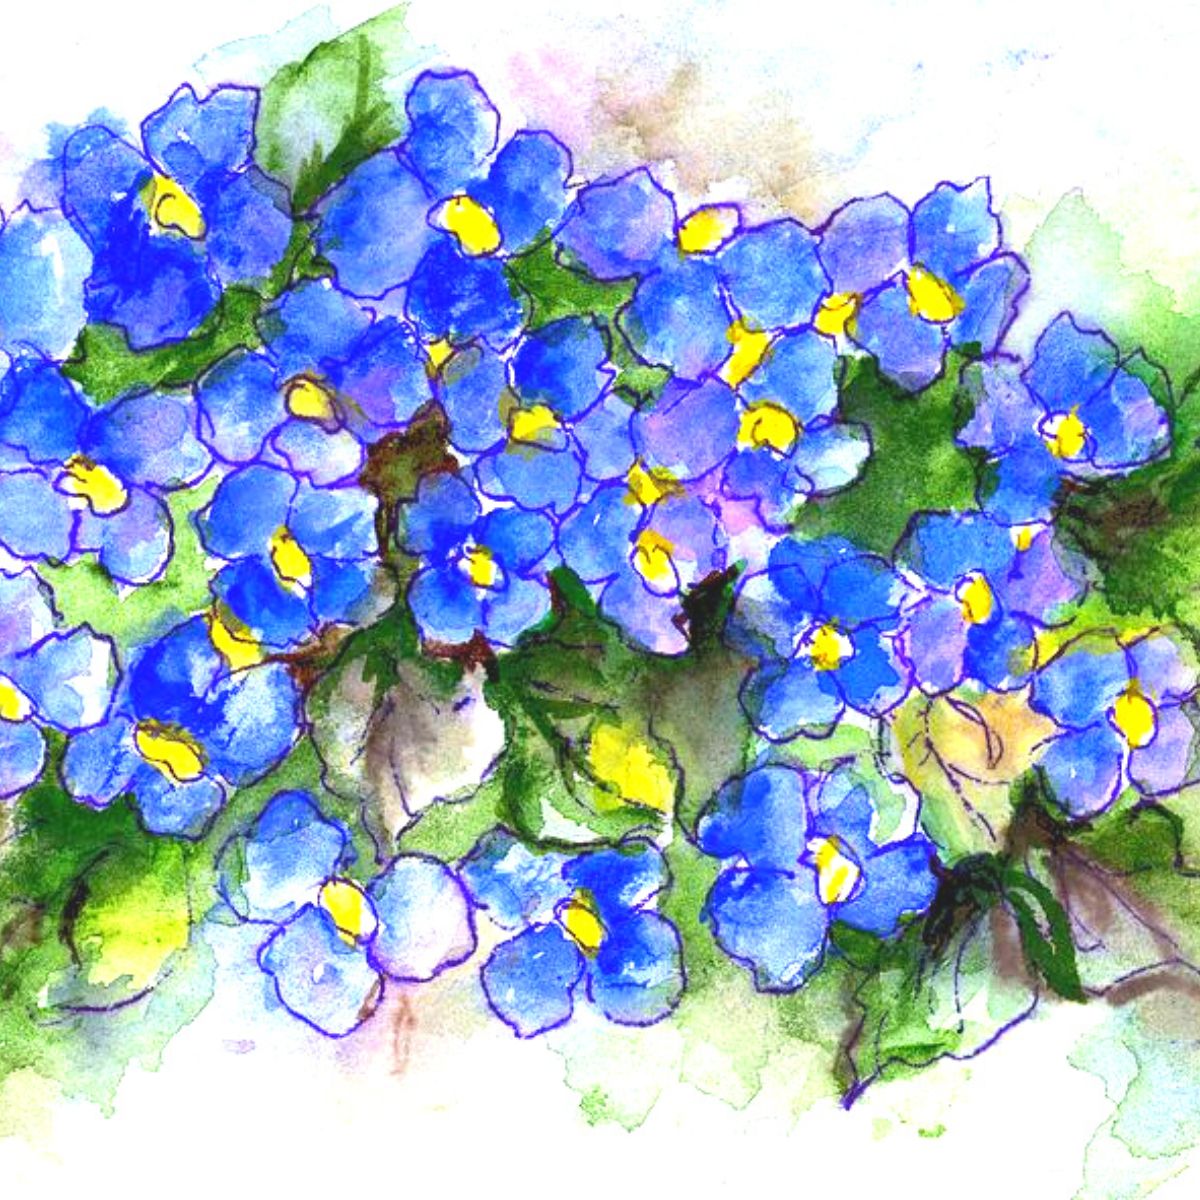 Blue Violets- on Thursd 